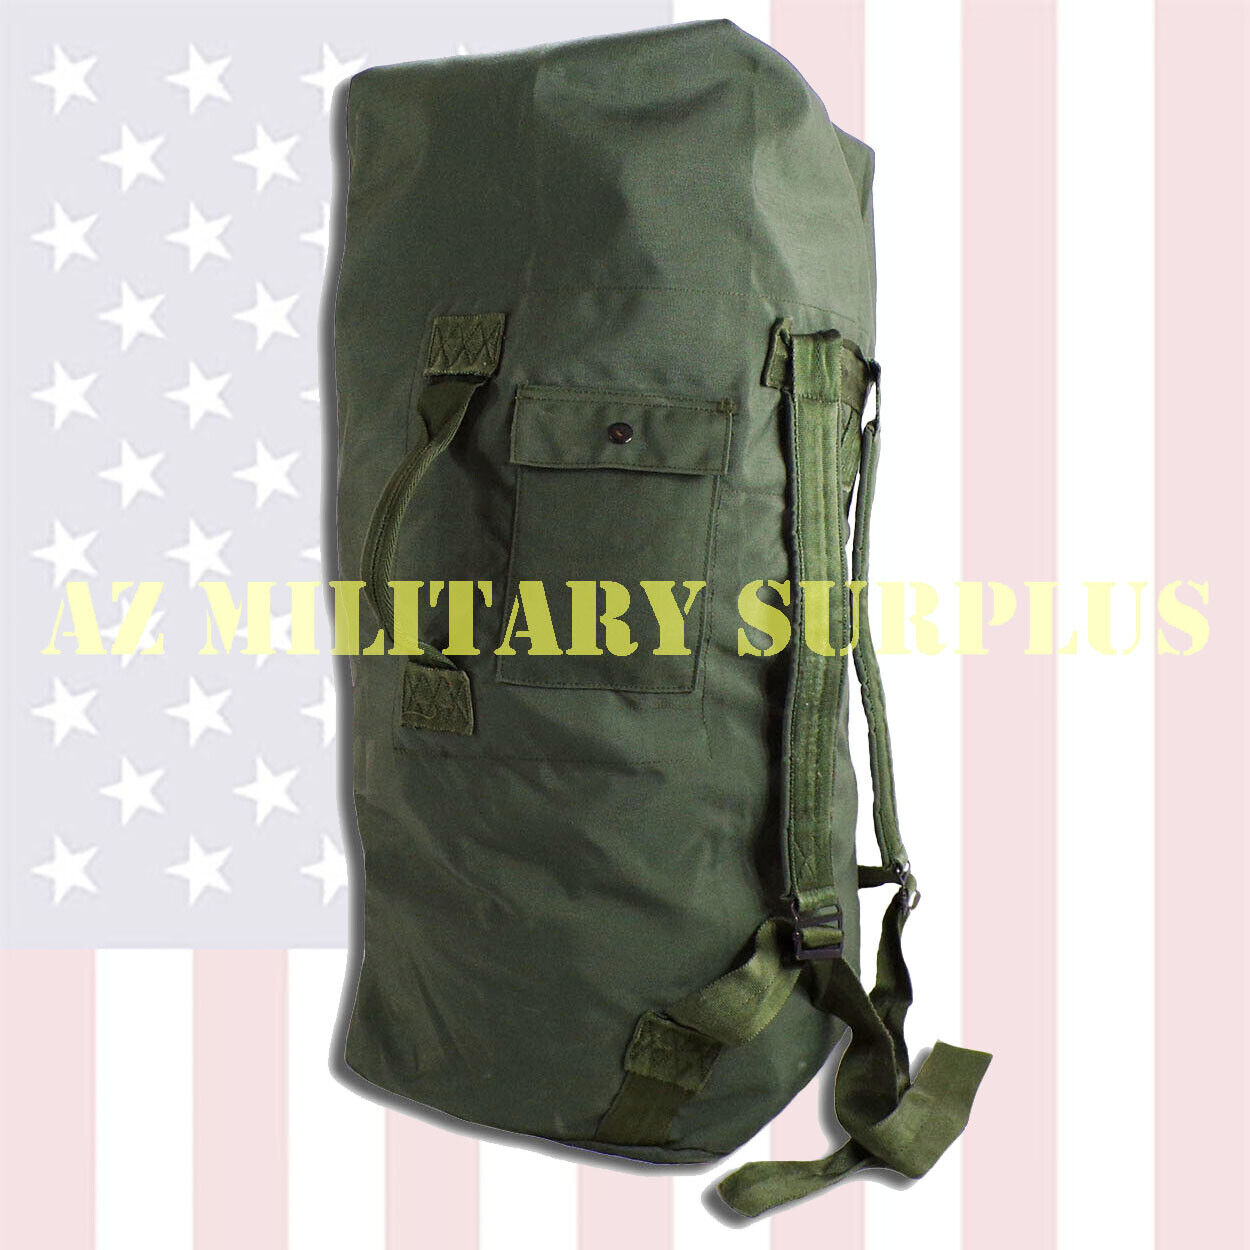 USGI Standard Duffel Bag, Current Issue US Military Sea Duffle Bag Very Good